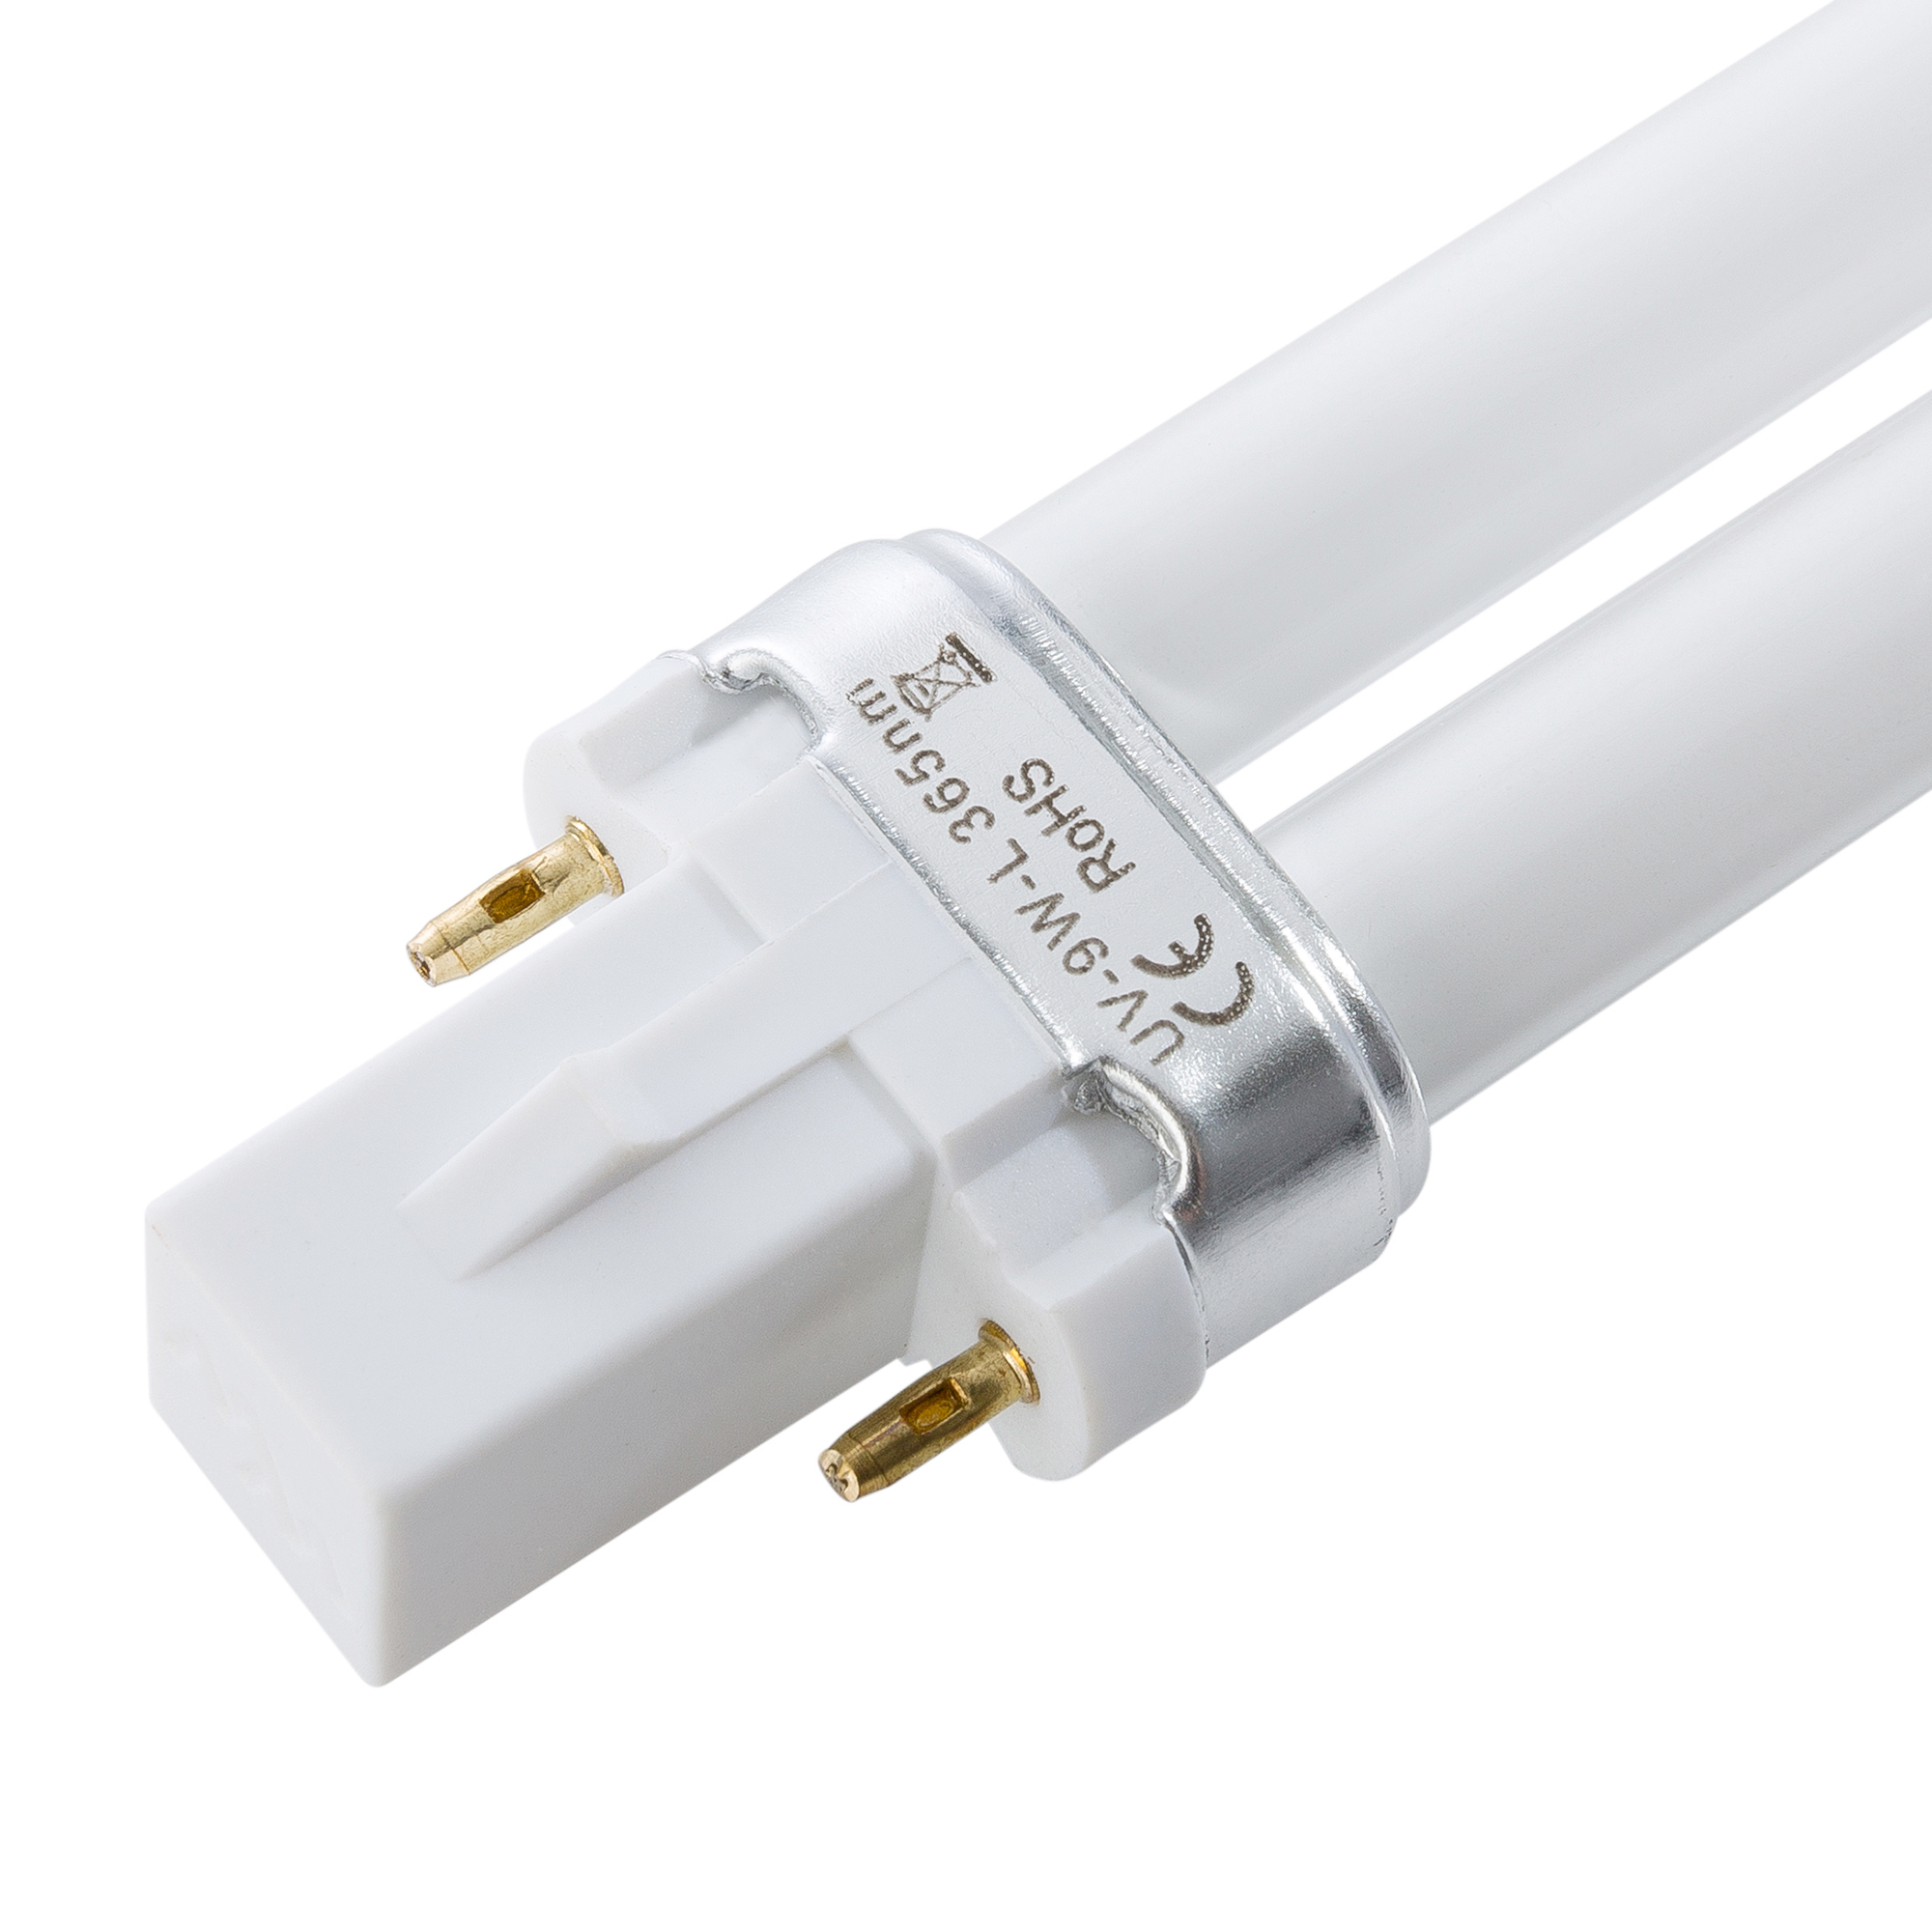 Feilen weiß + UV 2 Lampe 20 UV-Lichthärtungsgeräte AREBOS 4 Buffer 16 x Röhren inklusive +